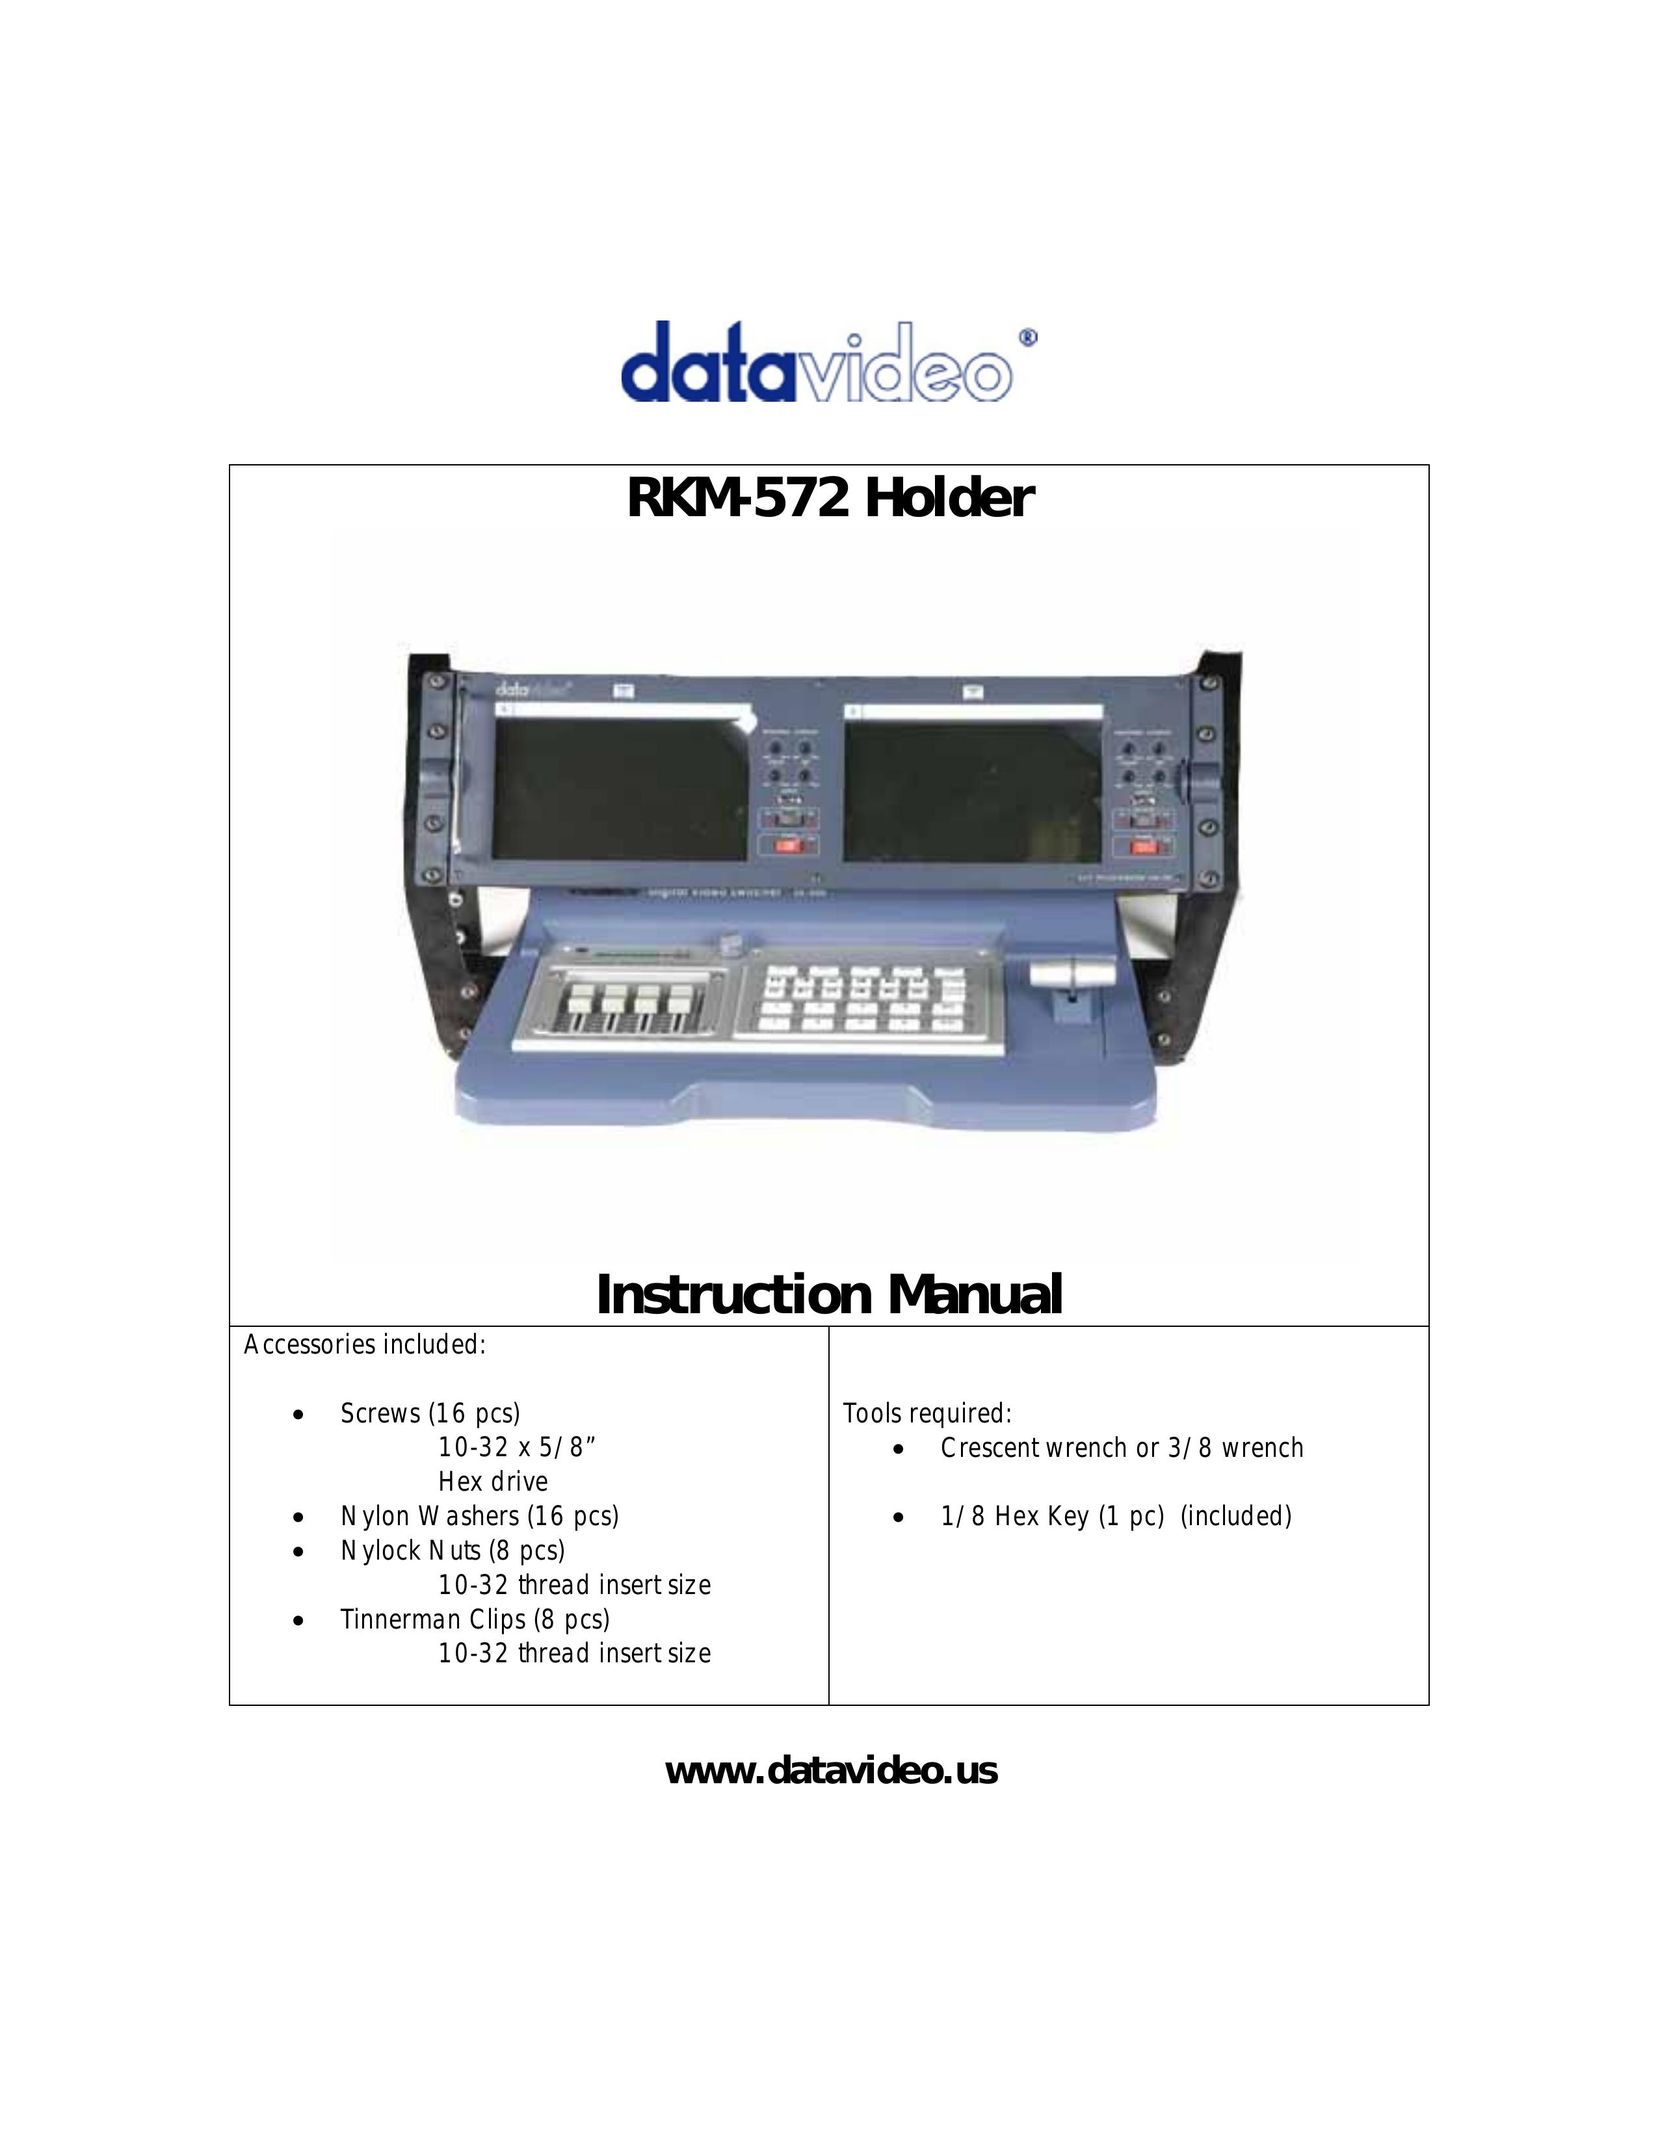 Datavideo RKM-572 Network Card User Manual